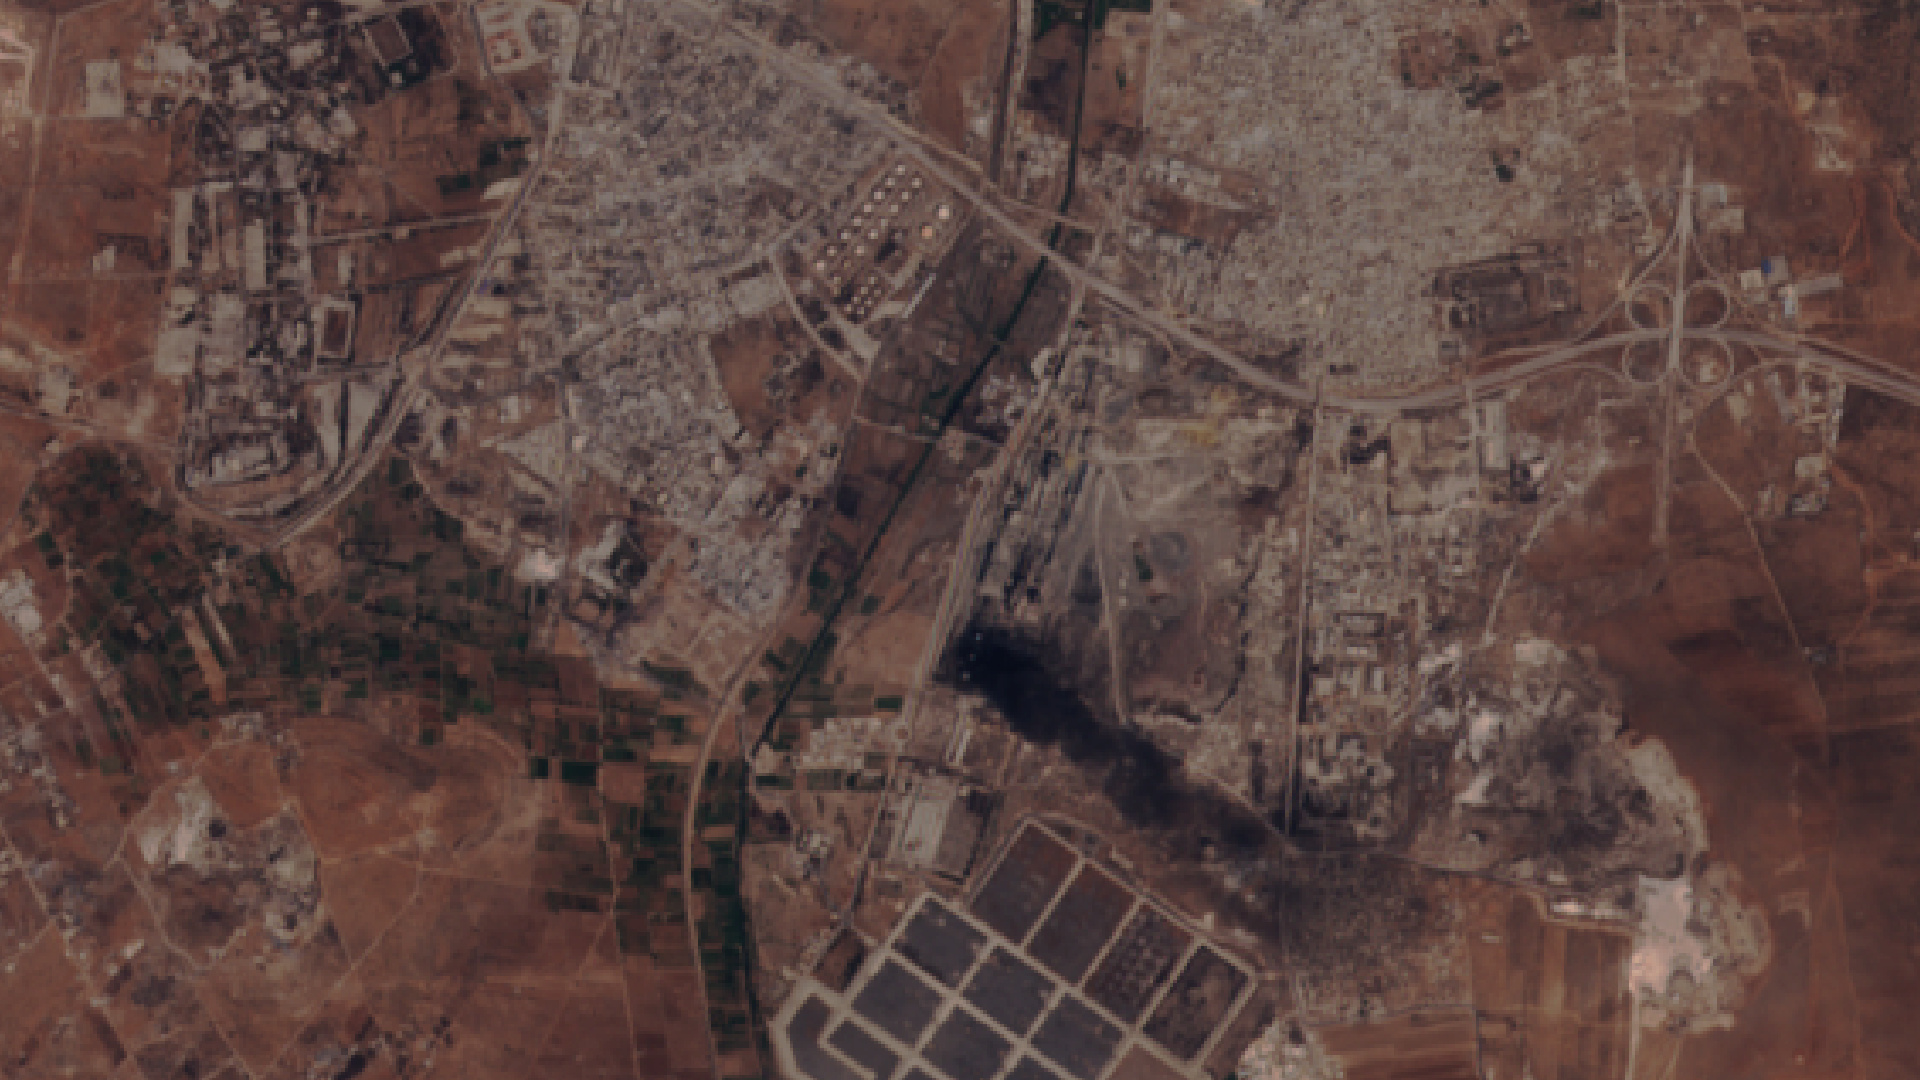 Syrie - Alep - Aleppo - Siège Bombardements - Raid aérien - rebelle - Omran - Sentinel-2 - ESA - 14 août 2016 - satellite - Copernicus - Union européenne